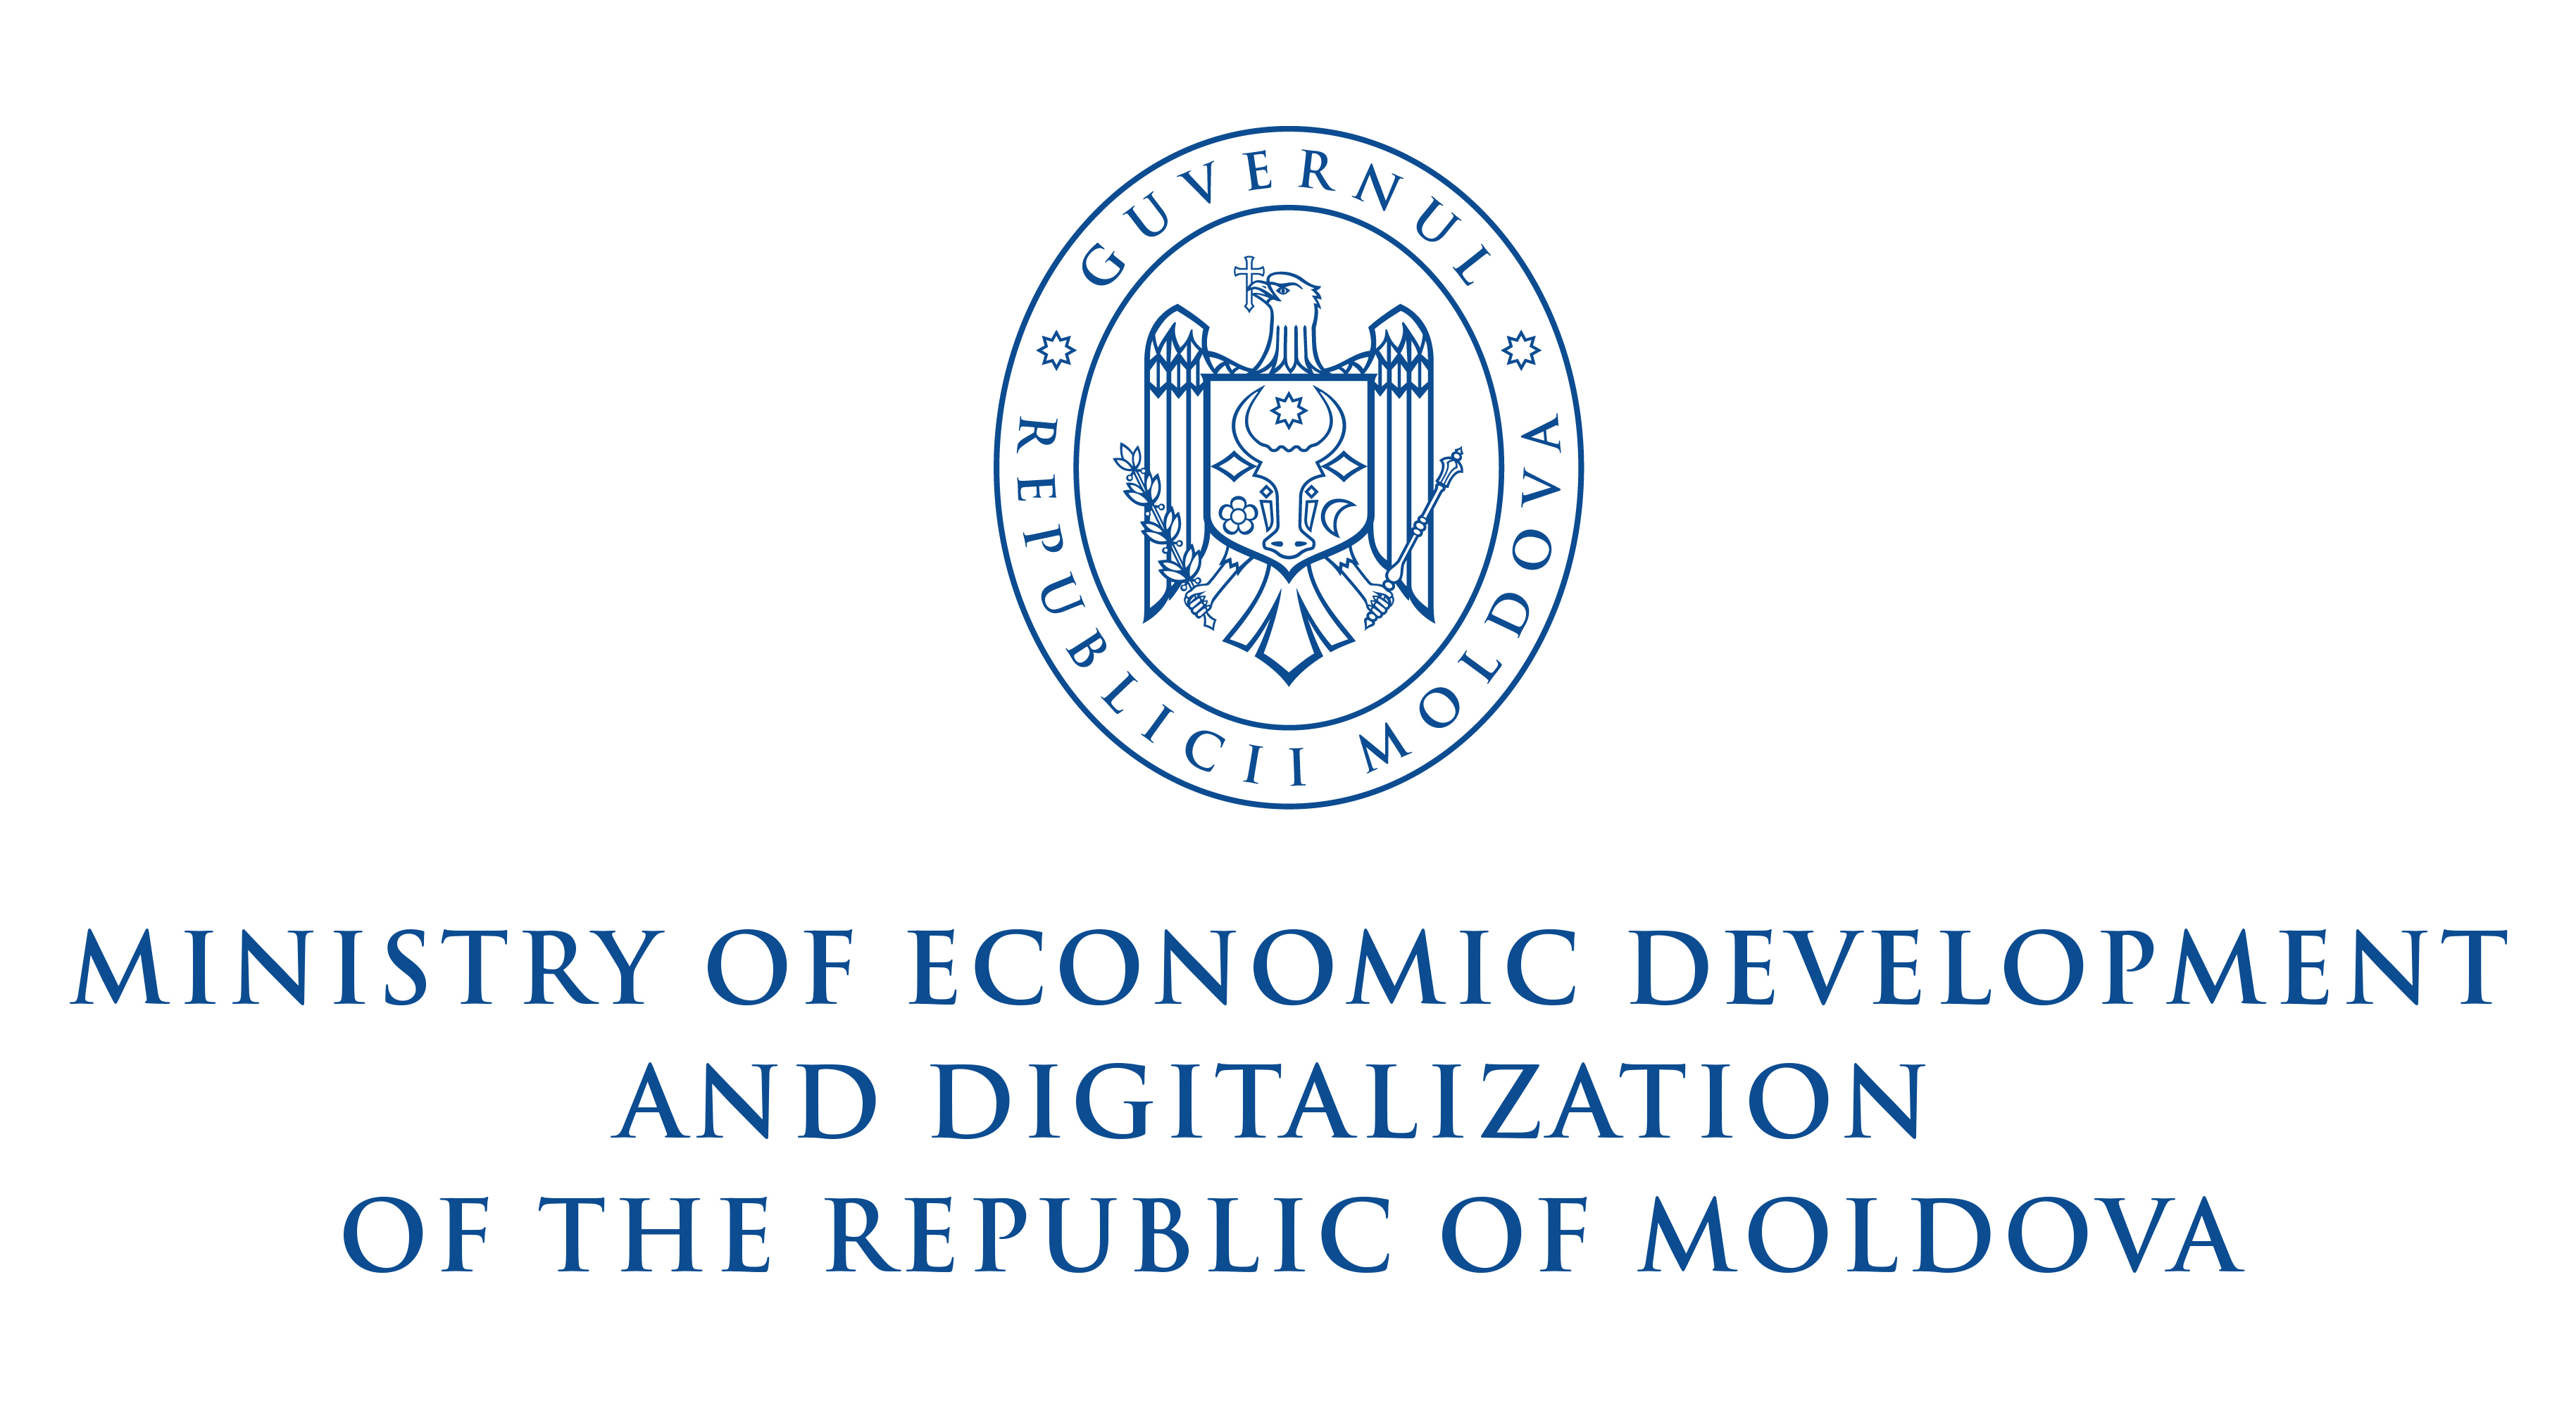 MINISTRY OF ECONOMIC DEVELOPMENT AND DIGITALIZATION OF THE REPUBLIC OF MOLDOVA